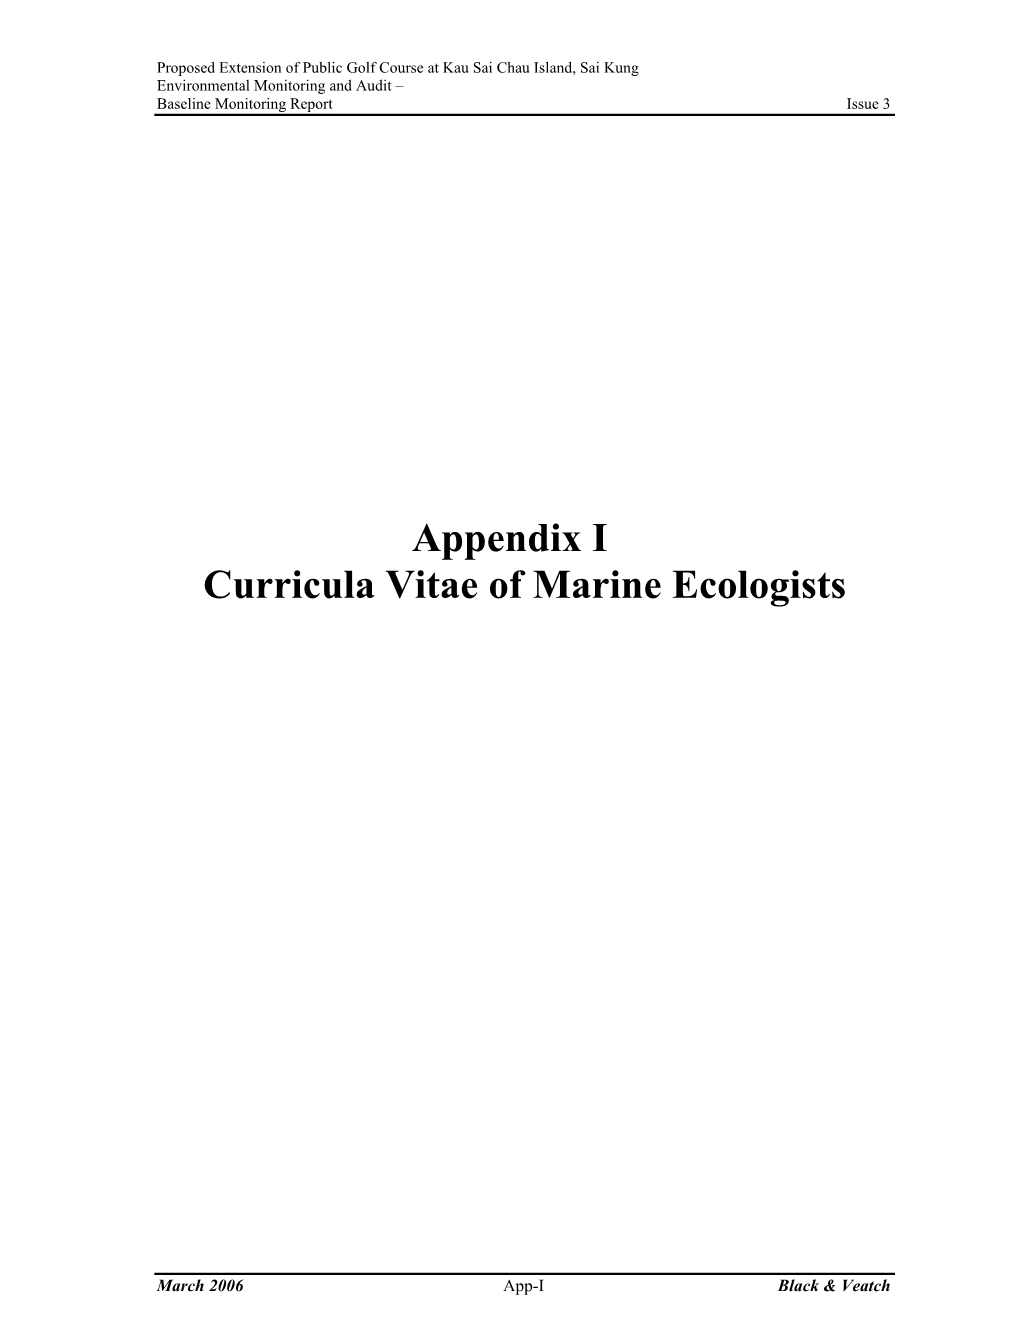 Appendix I Curricula Vitae of Marine Ecologists